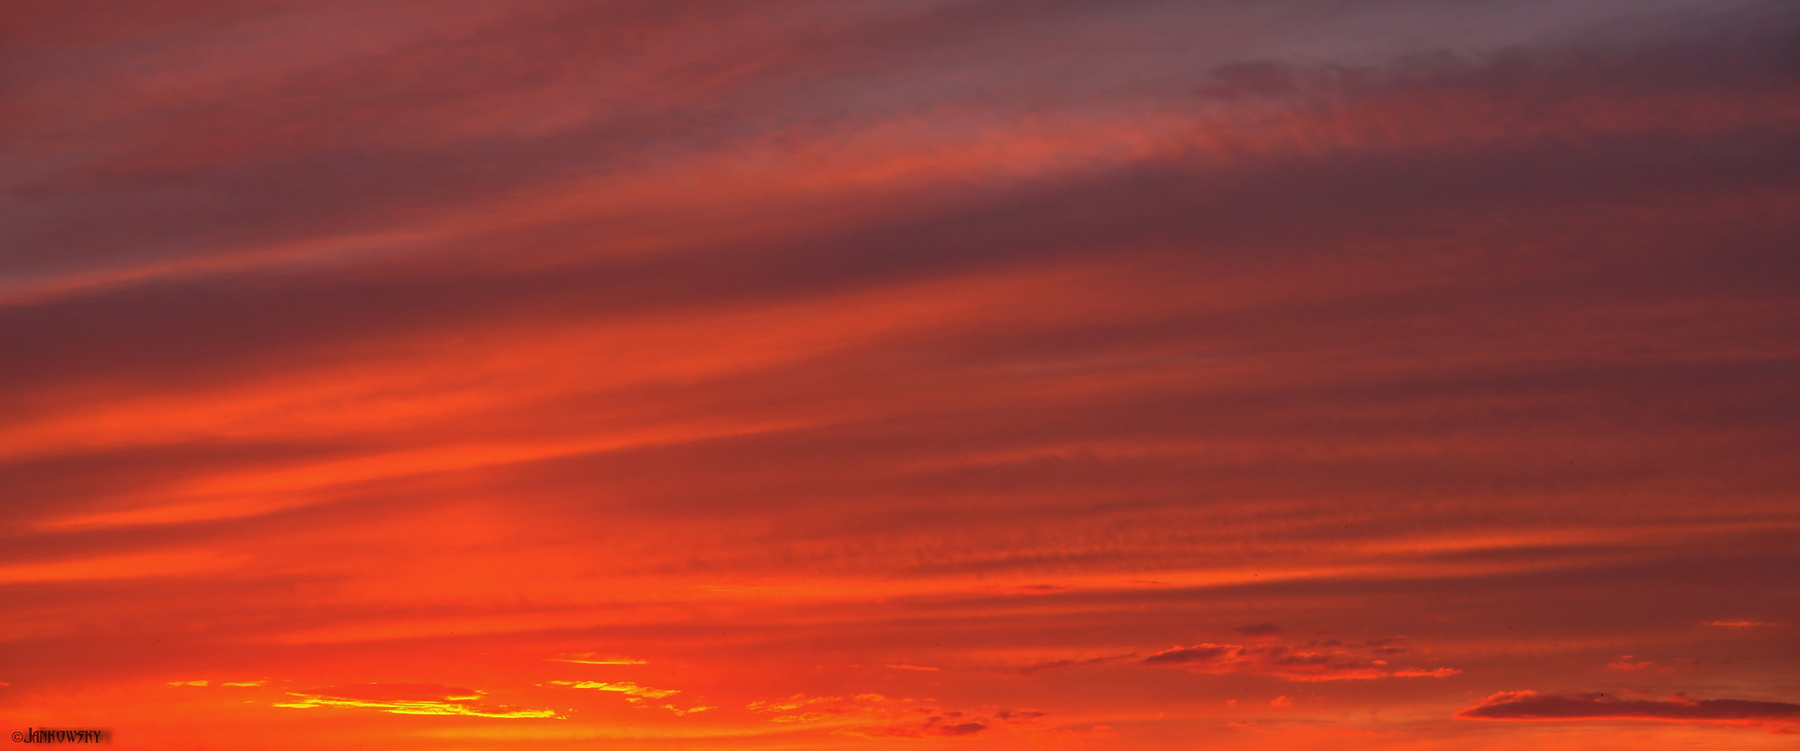 10.06.21 Sony DSC-R1 Sony DSC-R1 омск закат градиент сравнение цветопередача панорама облаков